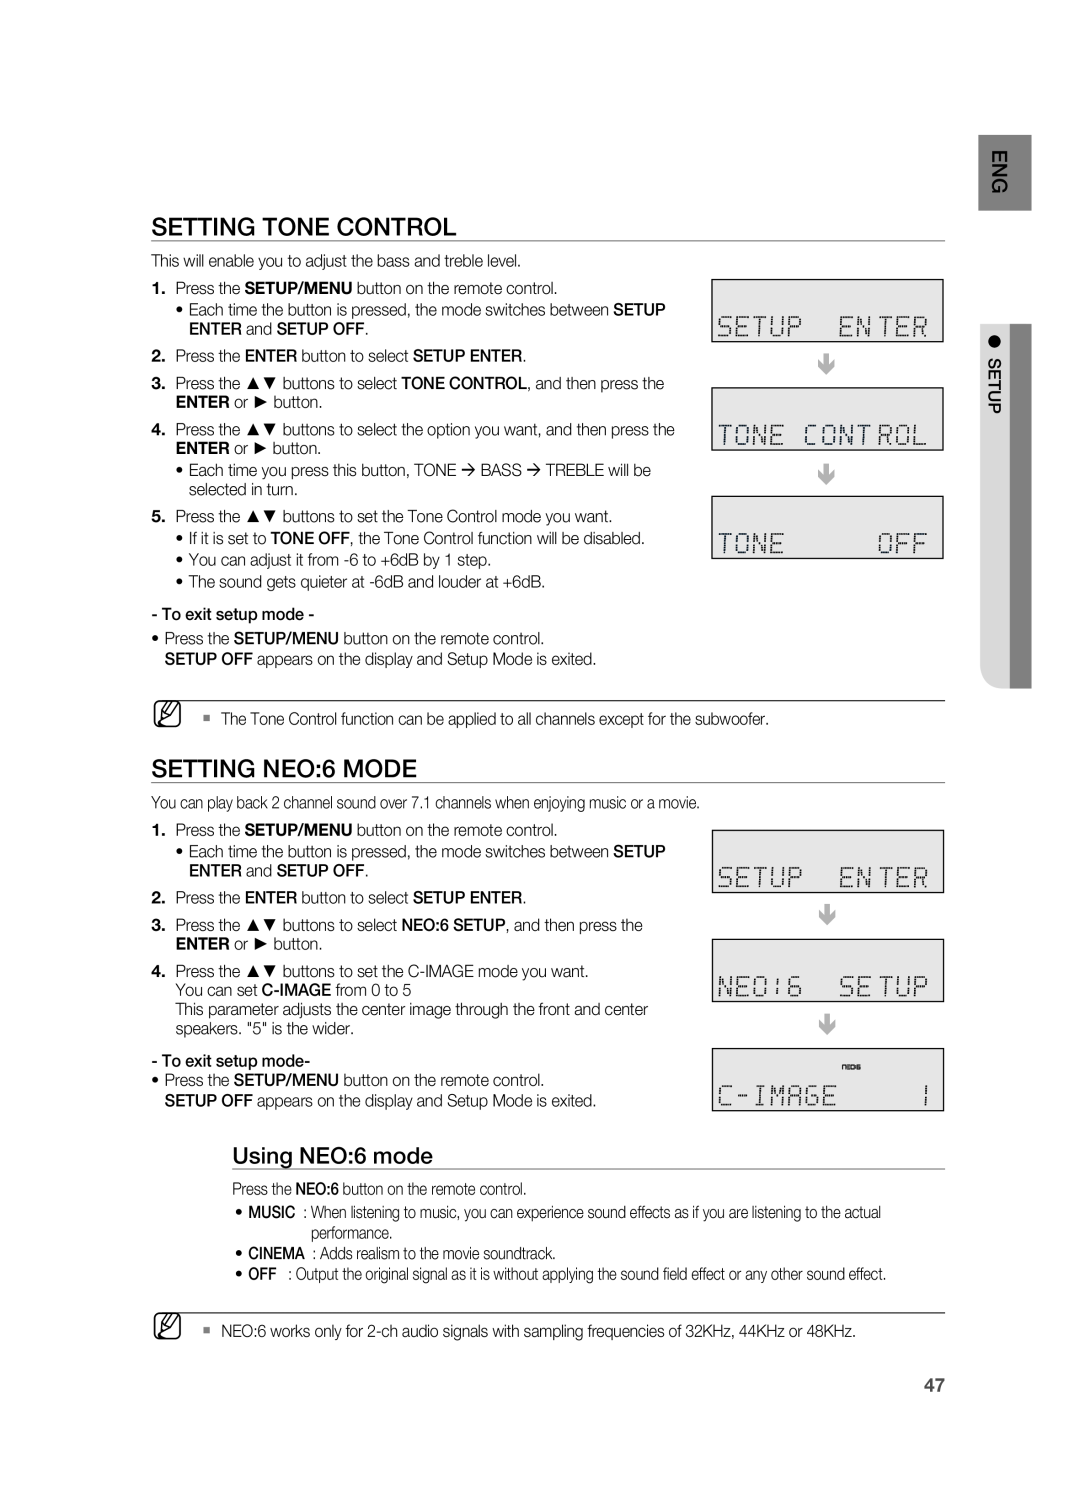 Samsung HW-C900-XAA user manual Setting Tone Control, SETTING NEO 6 MODE, Using NEO:6 mode 